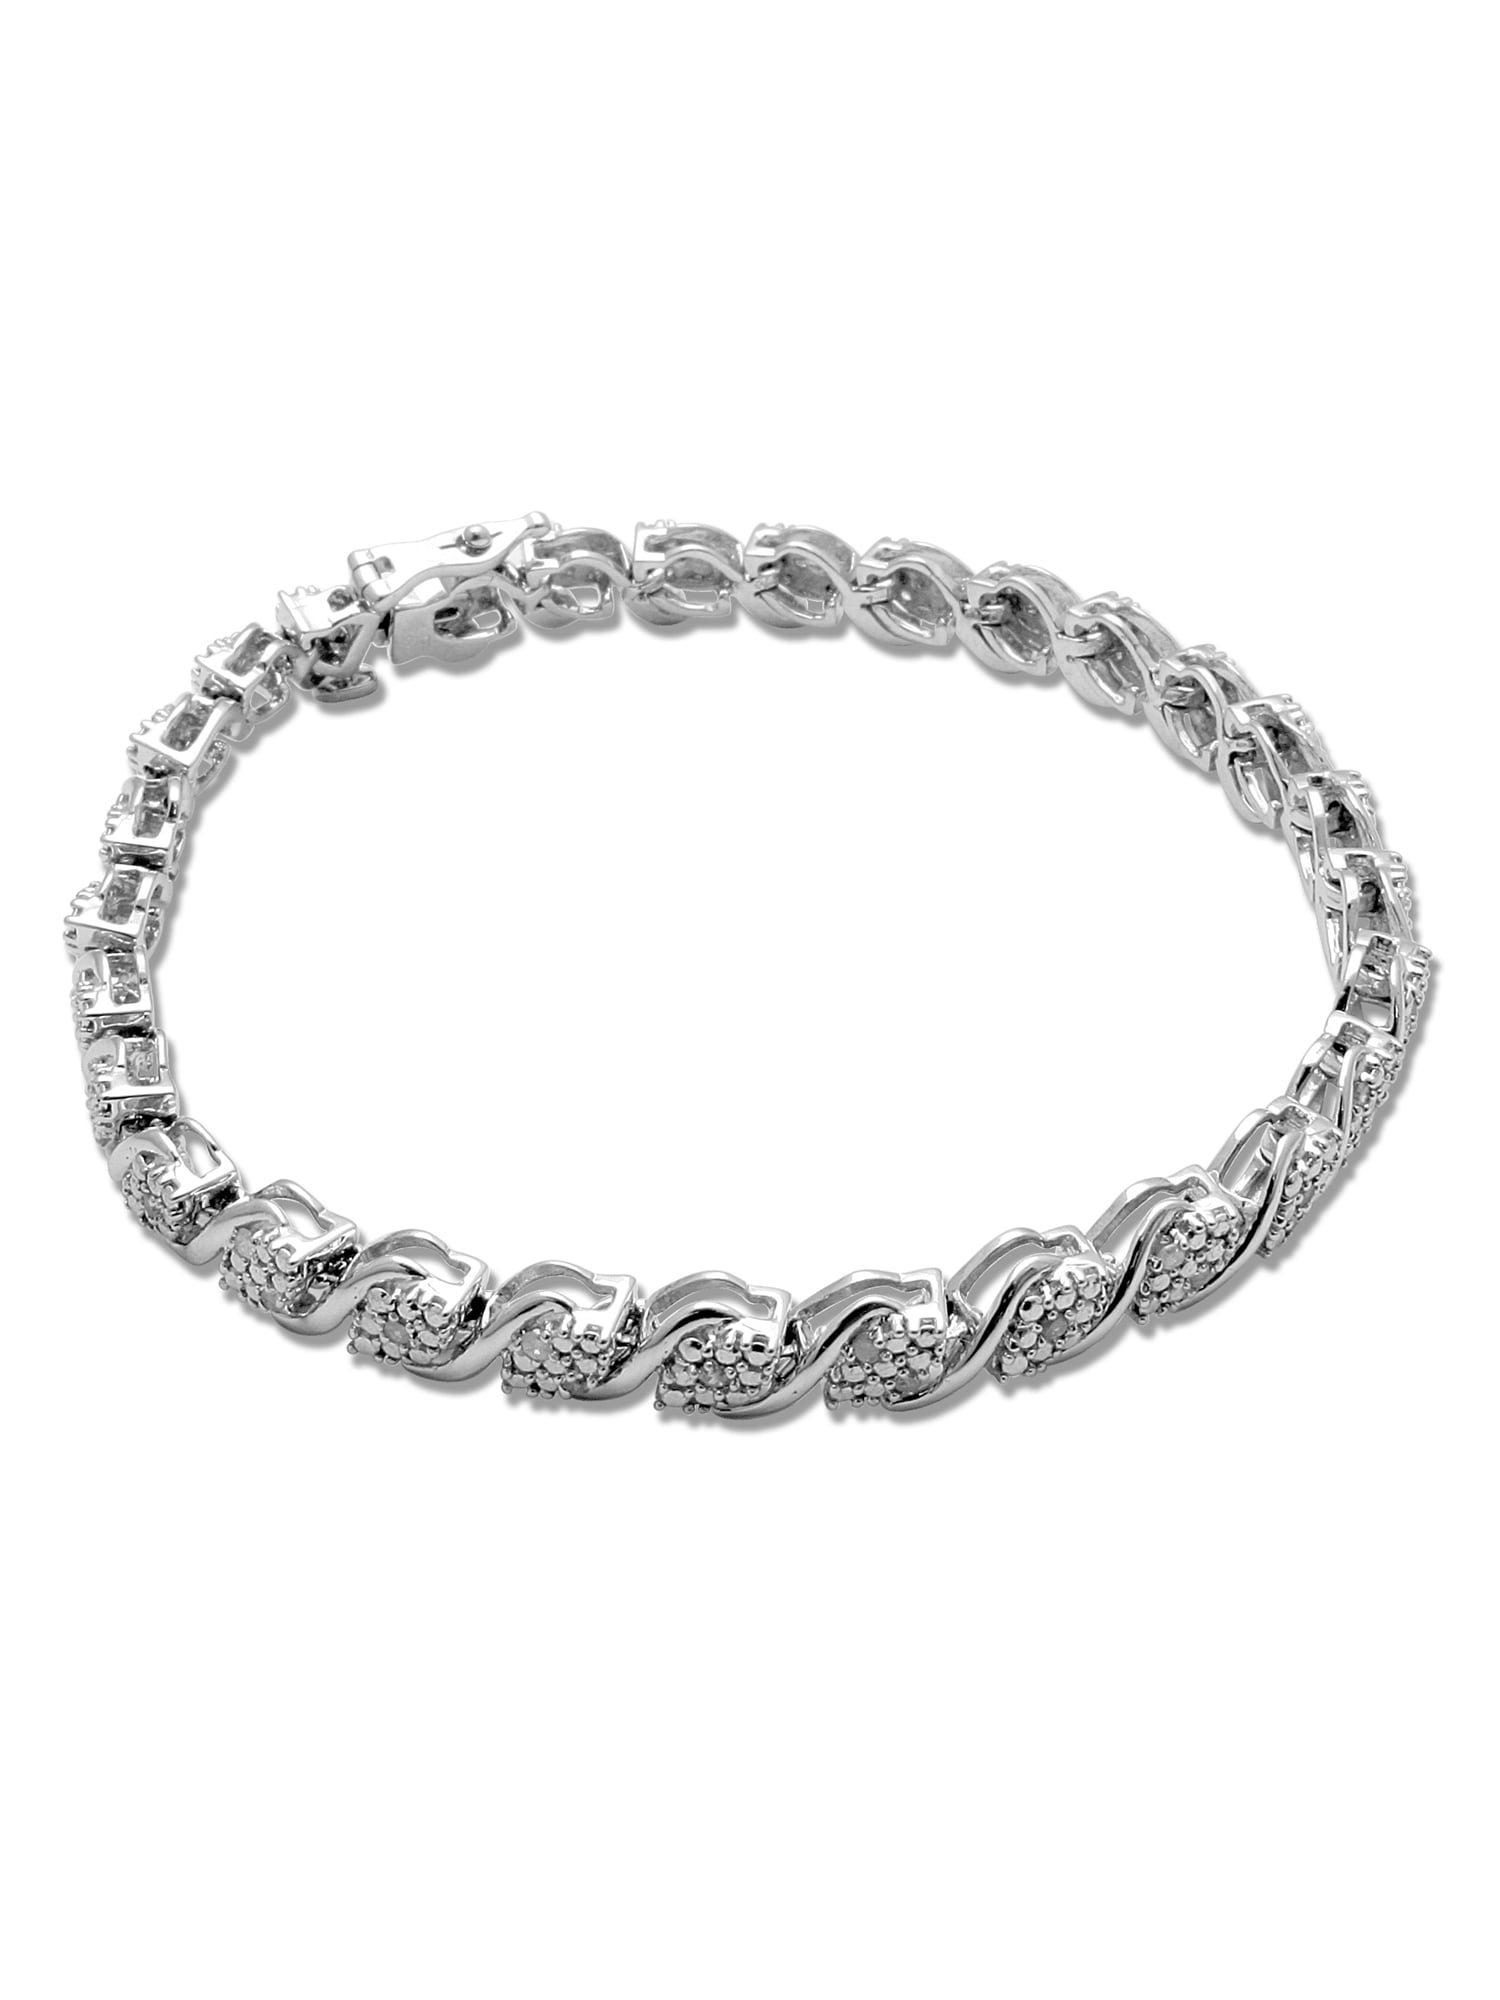 RYLOS Bracelets for Women 925 Sterling Silver Tennis Bracelet Gemstones &  Halo of Diamonds Adjustable to Fit 7